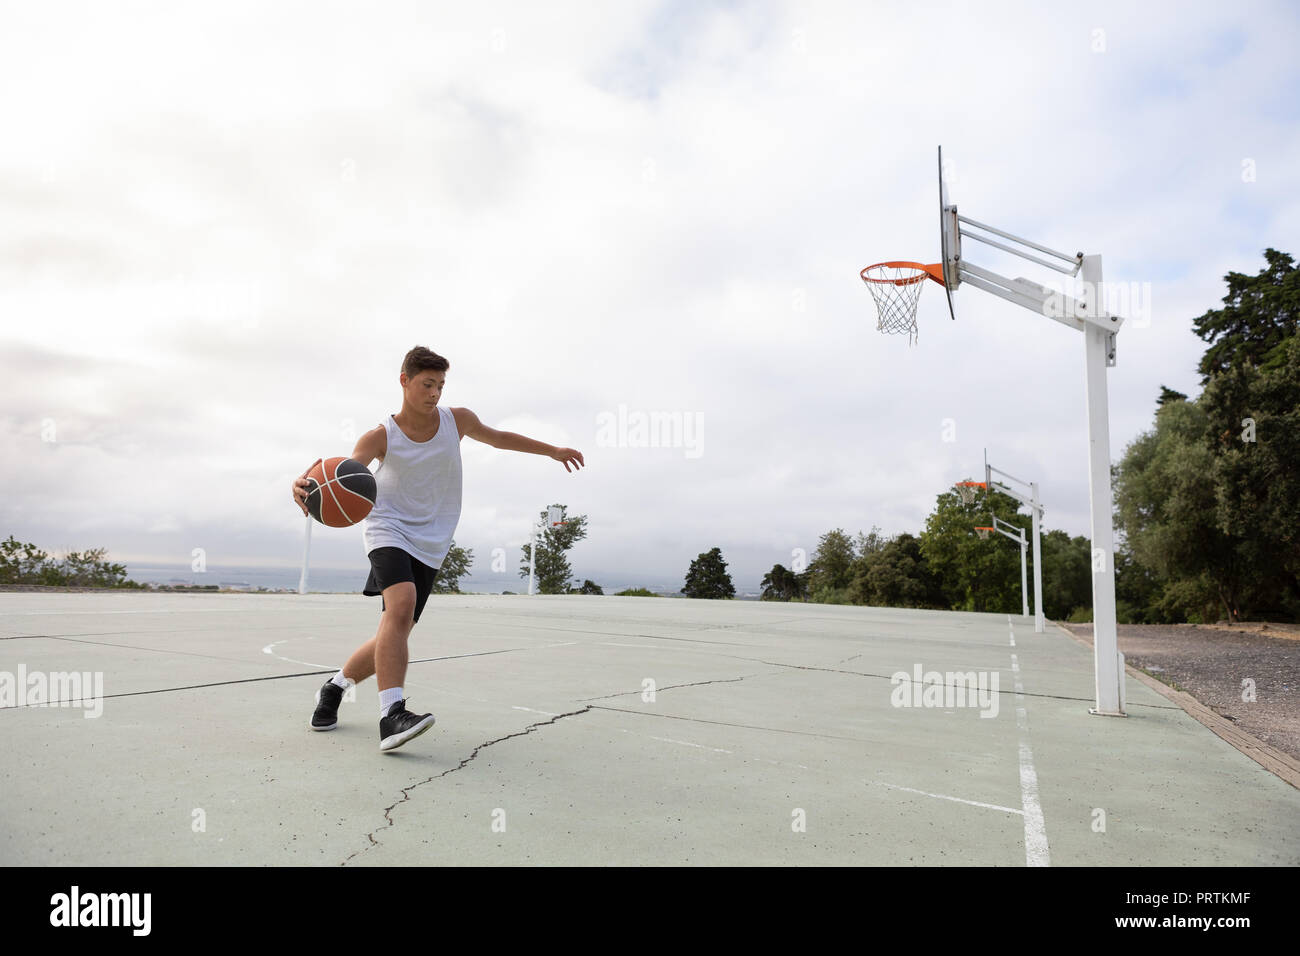 Les adolescents de sexe masculin de basket-ball avec ballon sur un terrain de basket-ball Banque D'Images